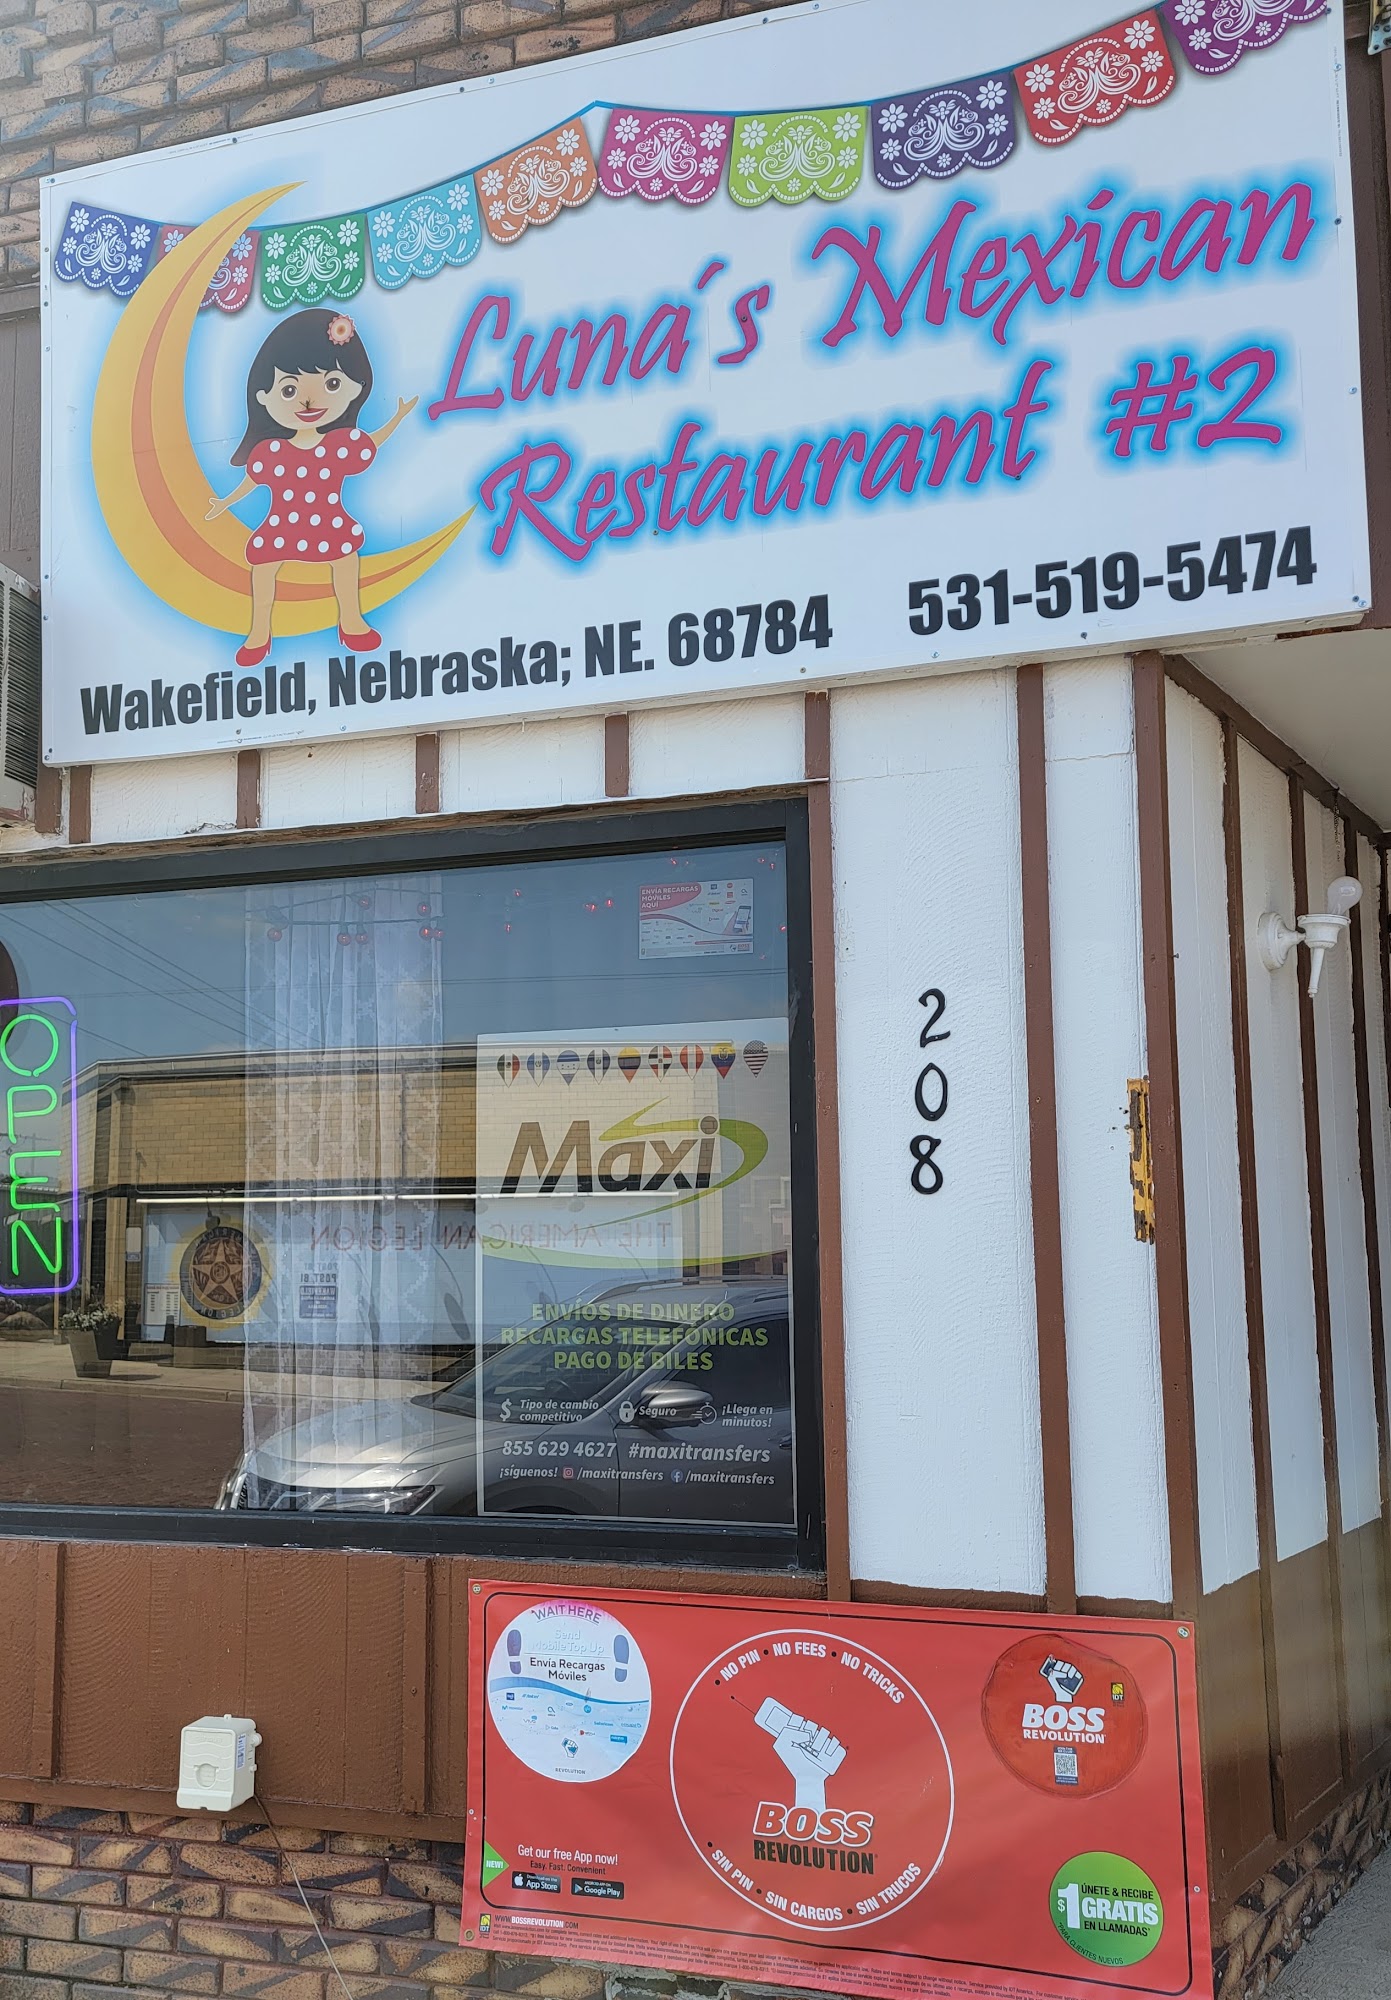 Luna's Mexican Restaurant #2